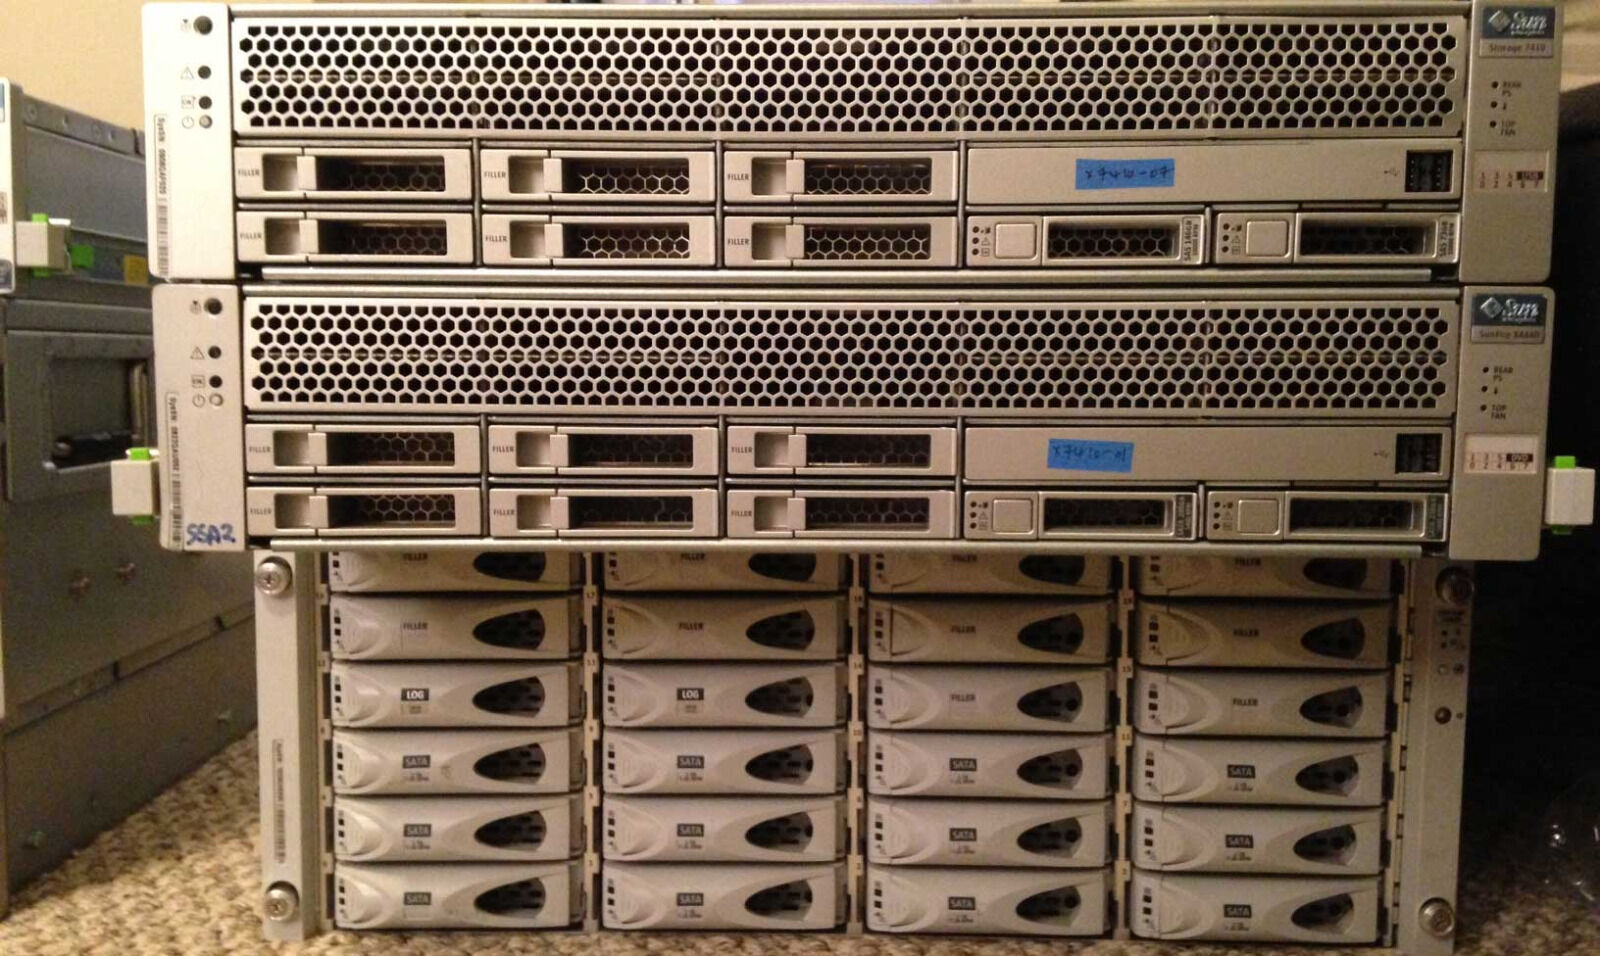 Sun Storage 7410 | Oracle Storage 7410 Server | 12 TB Server - Fully Functional